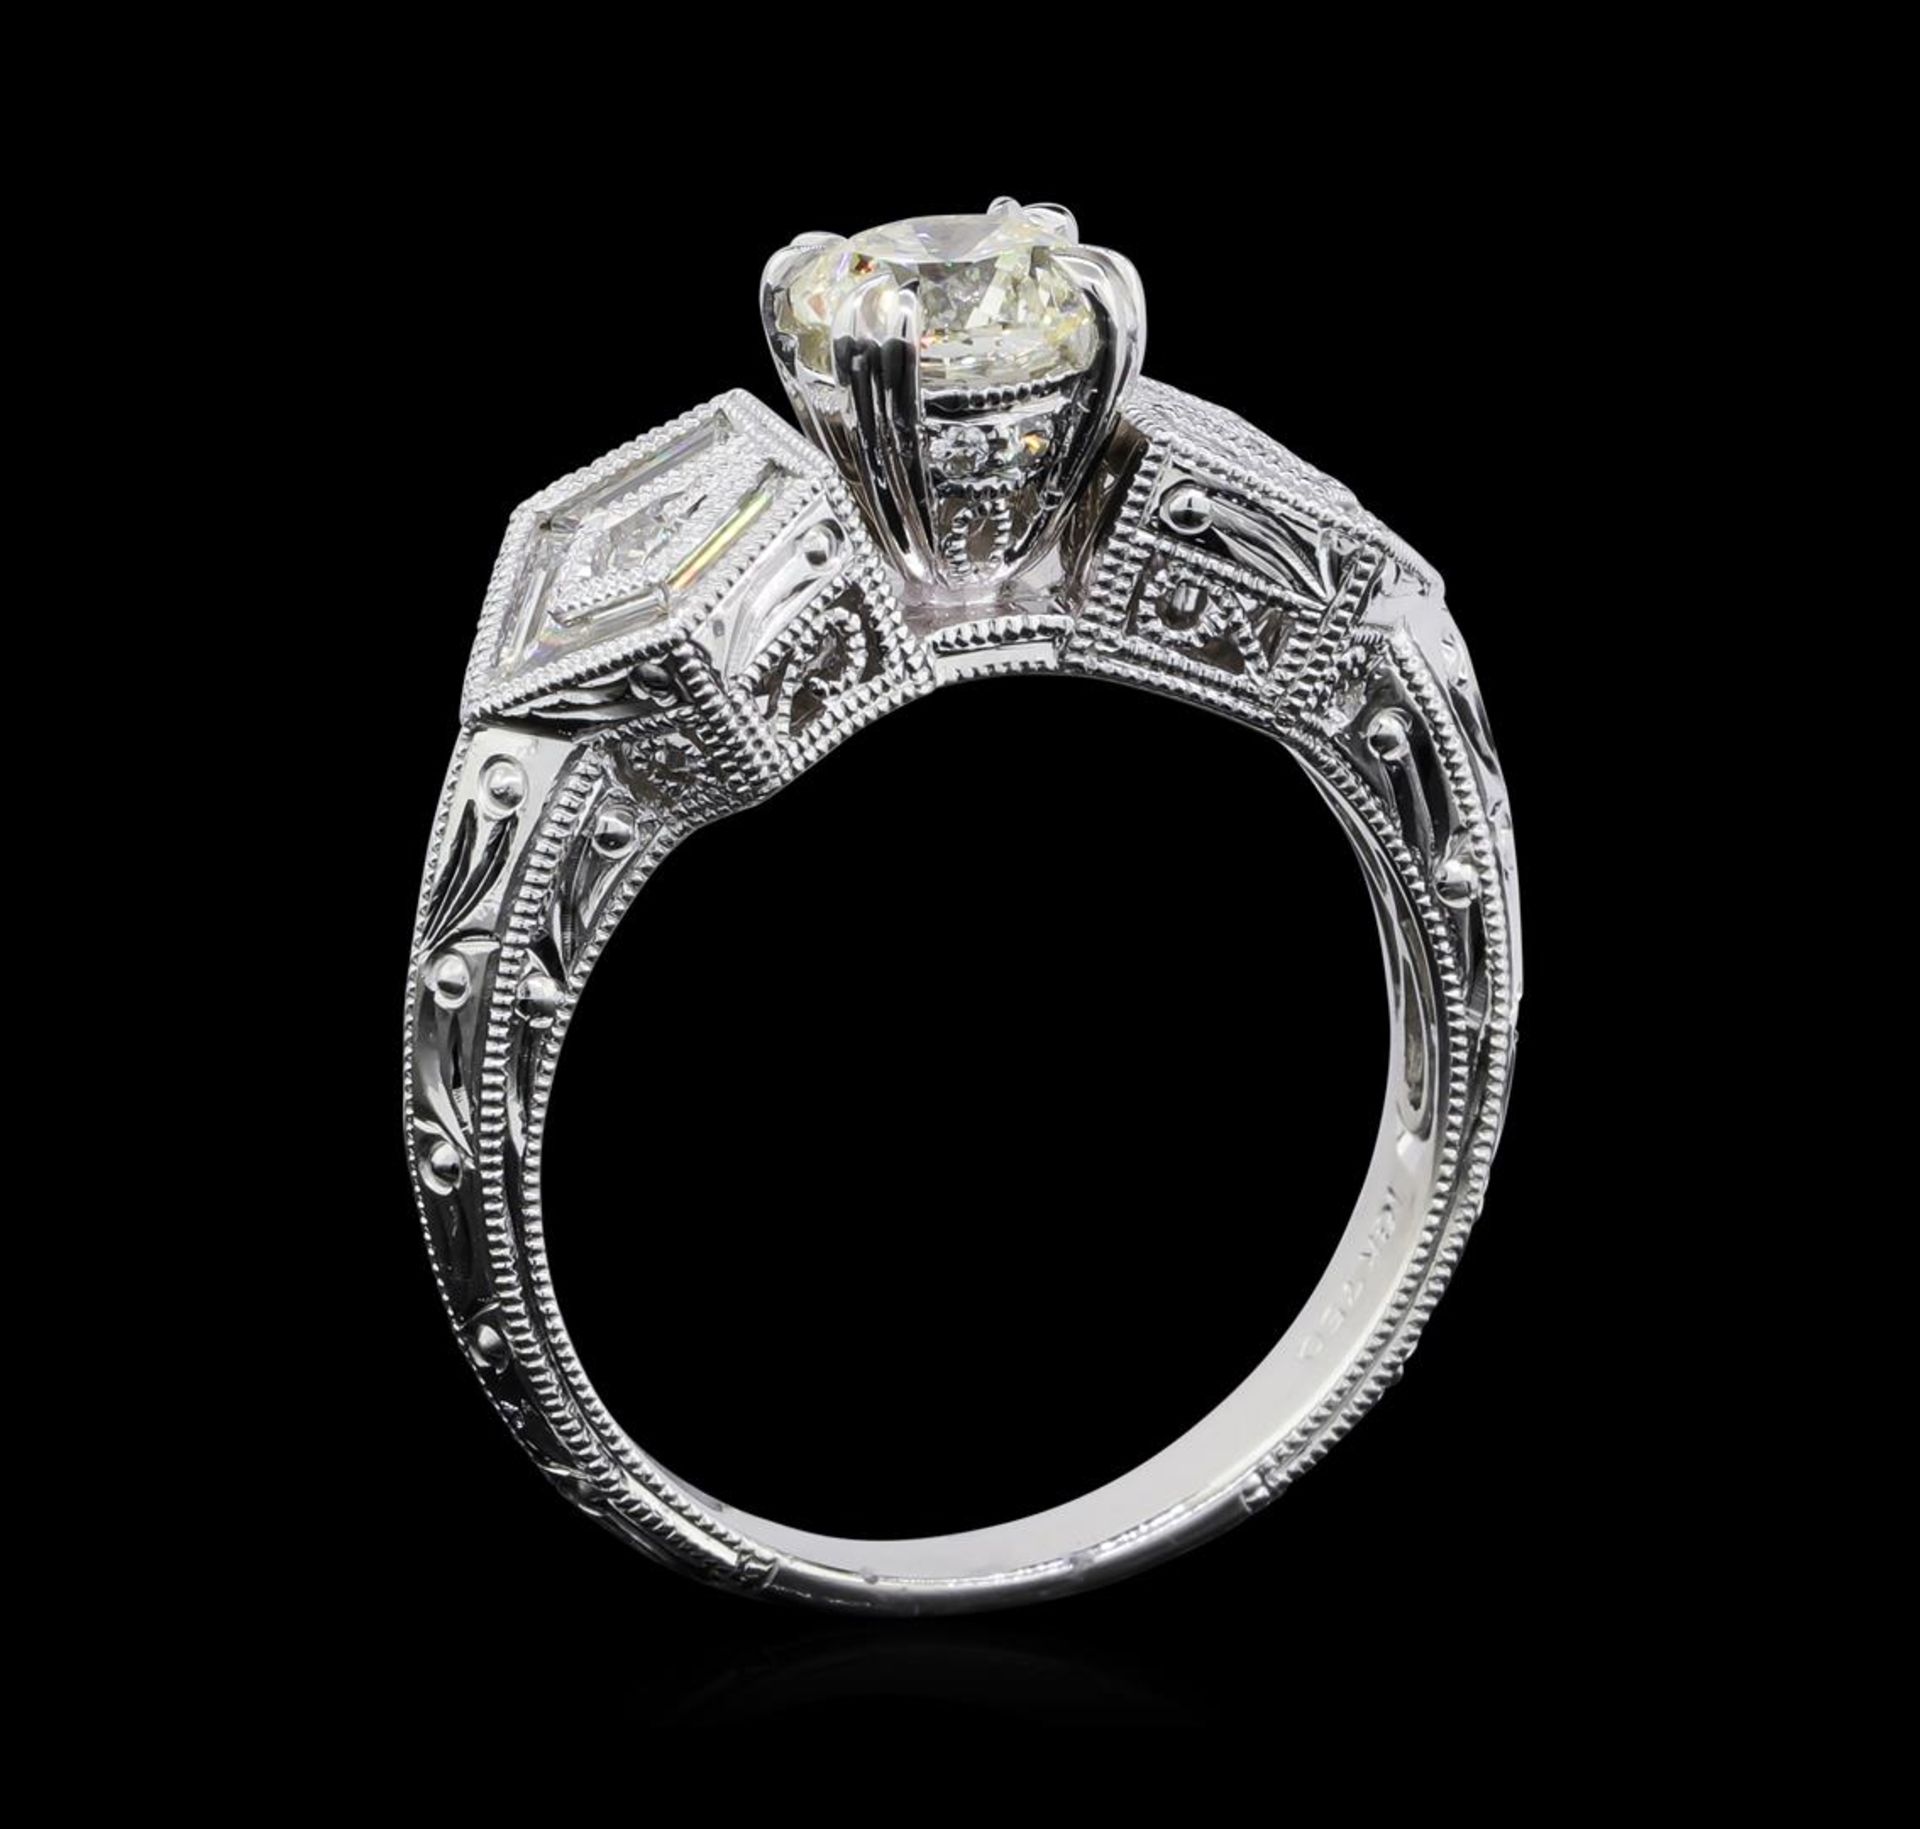 1.37 ctw Diamond Ring - 18KT White Gold - Image 5 of 7